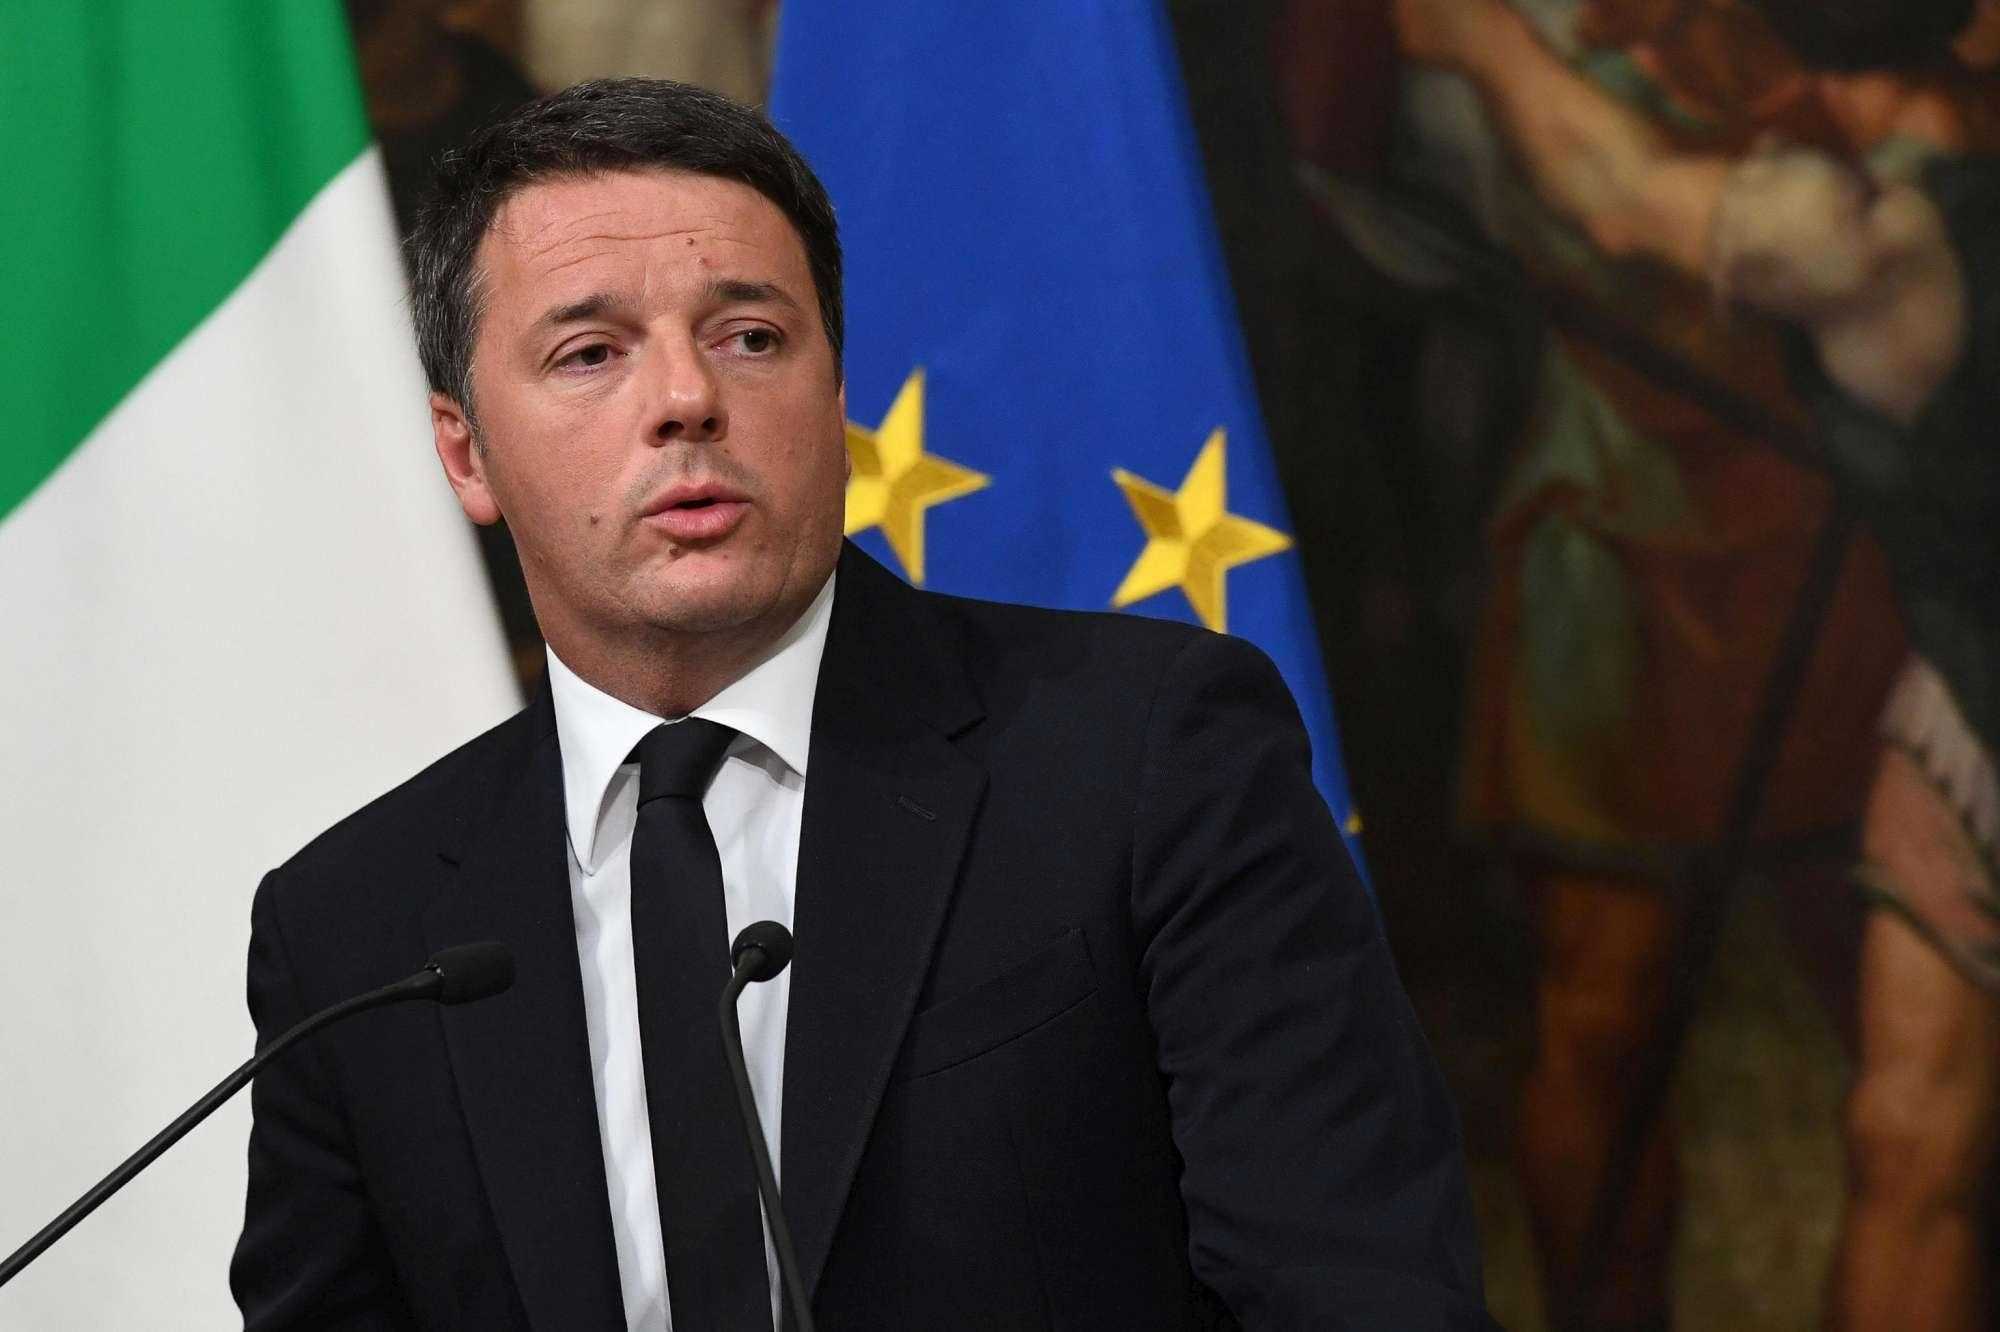 Polemica su frasi Dijsselbloem, Renzi: "Ha perso occasione per tacere"